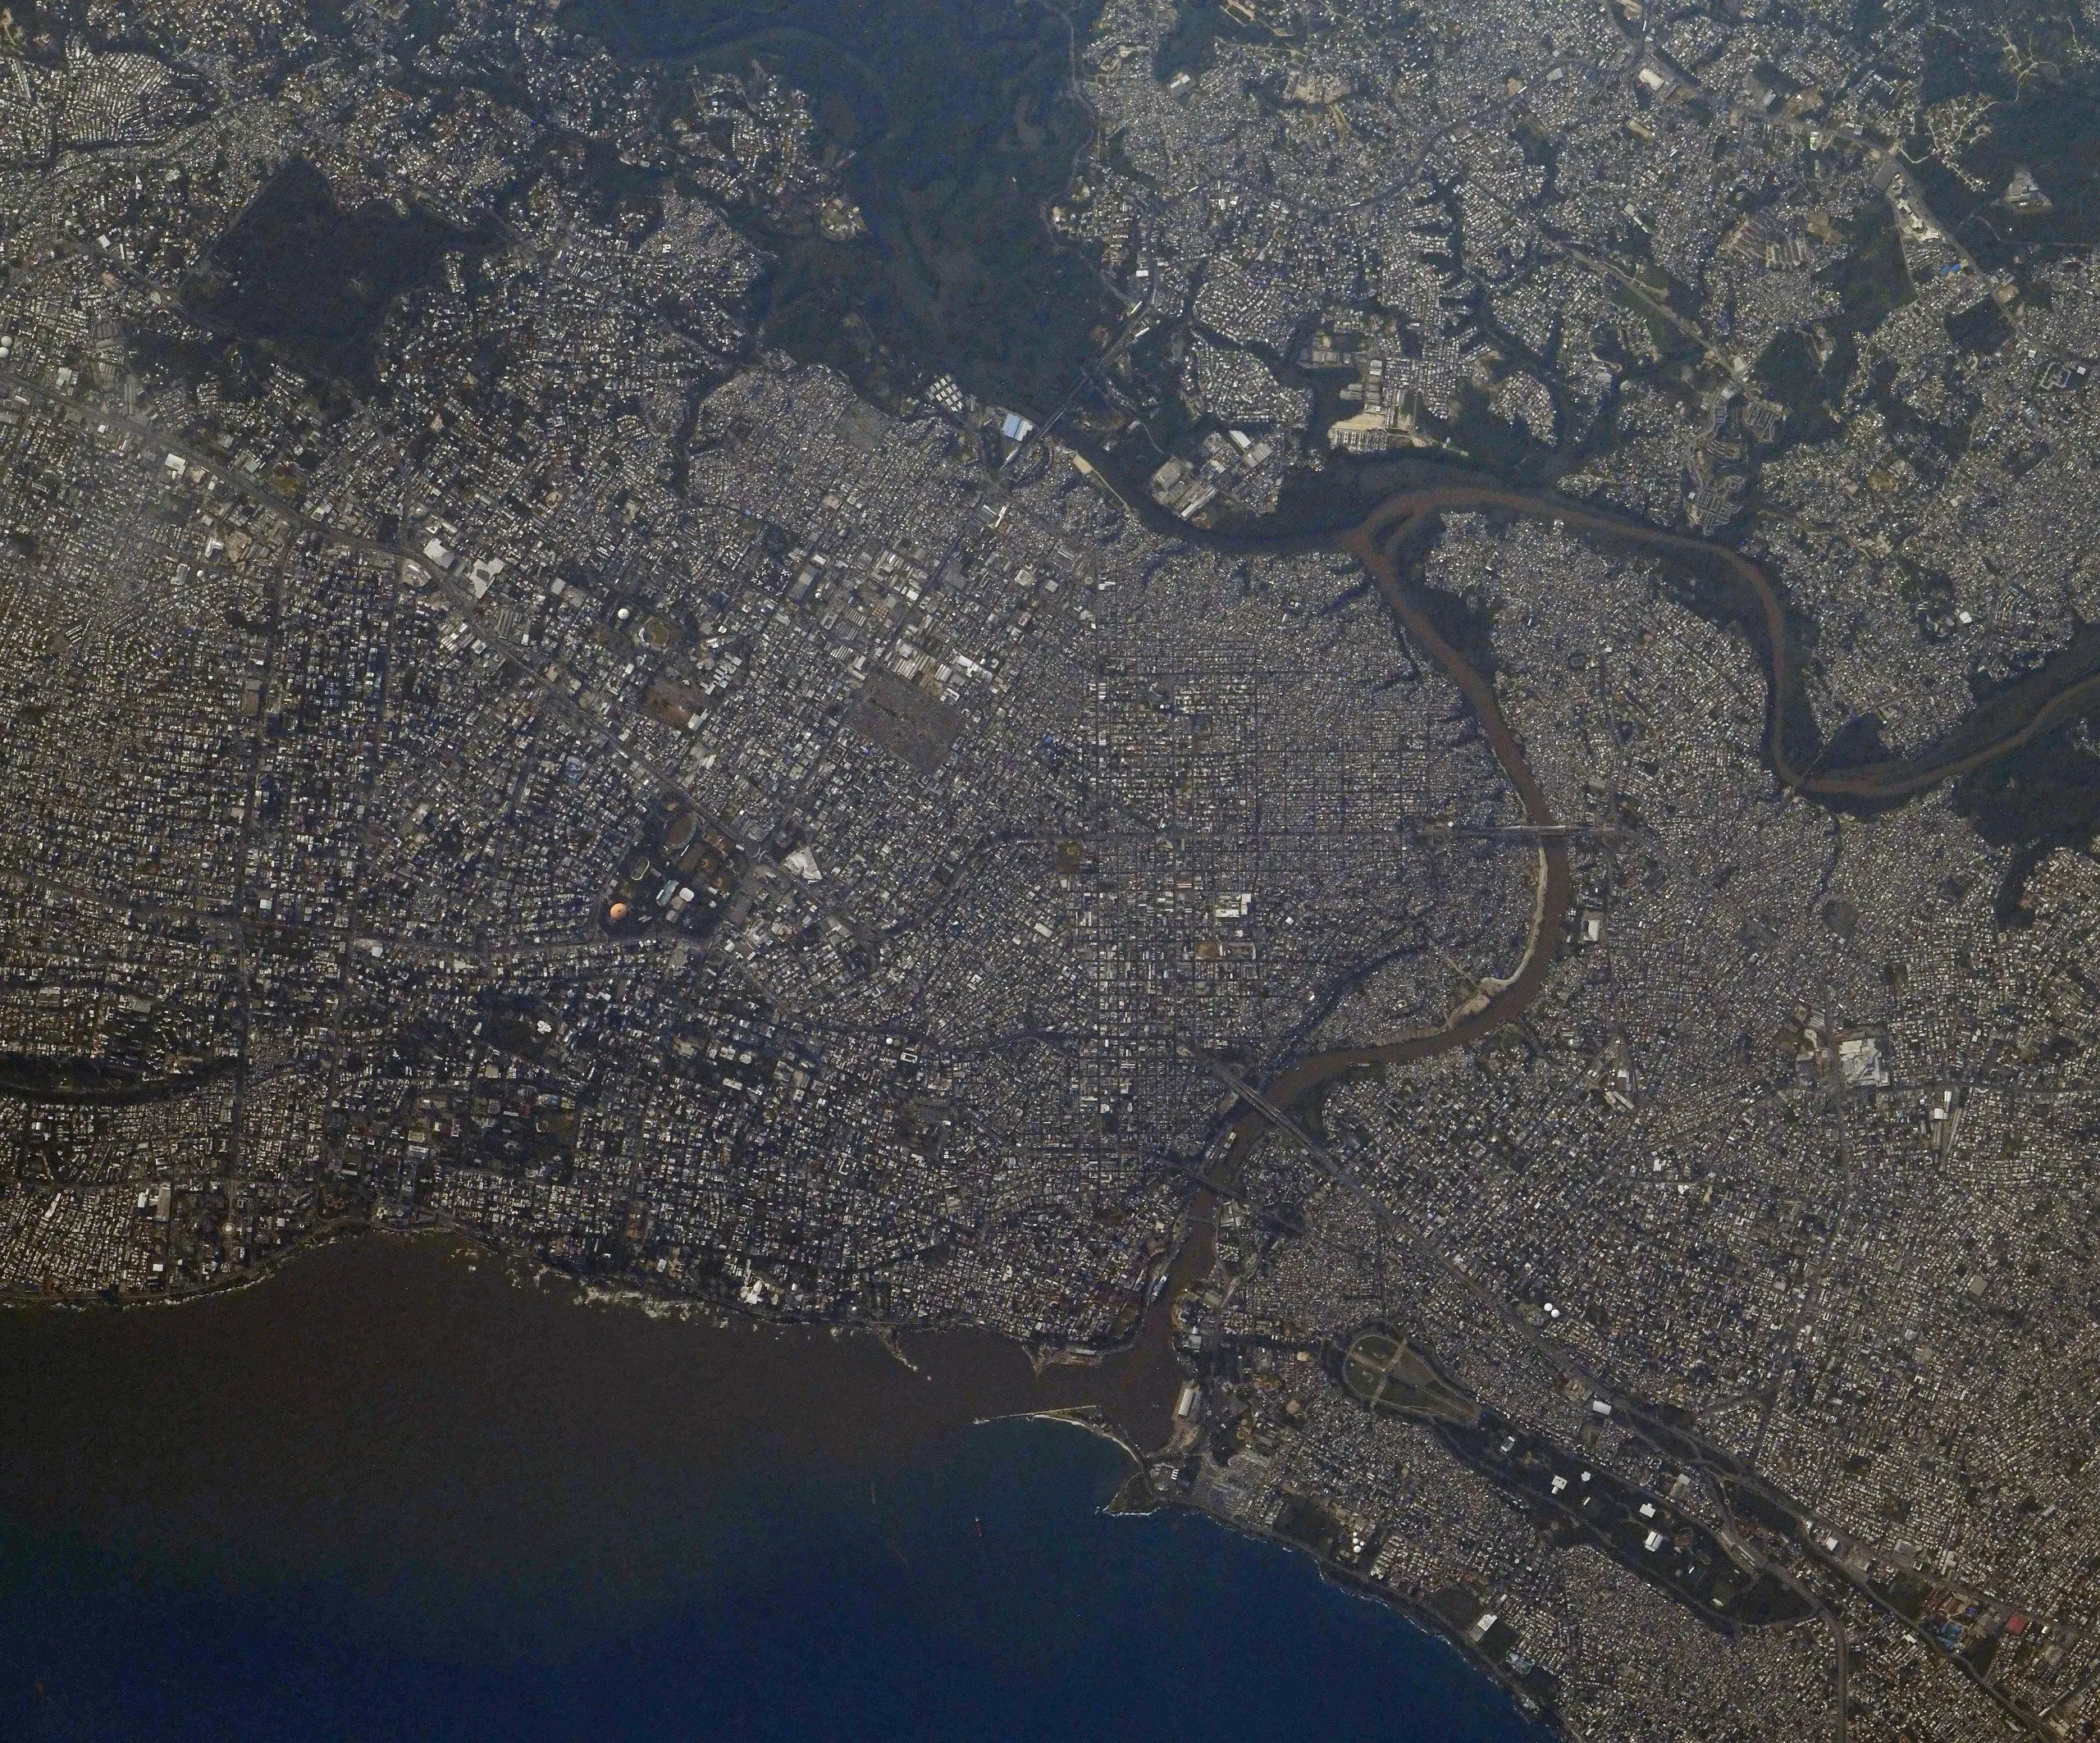 Santo Domingo vista desde el espacio, gracias al astronauta Oleg Novitskiy